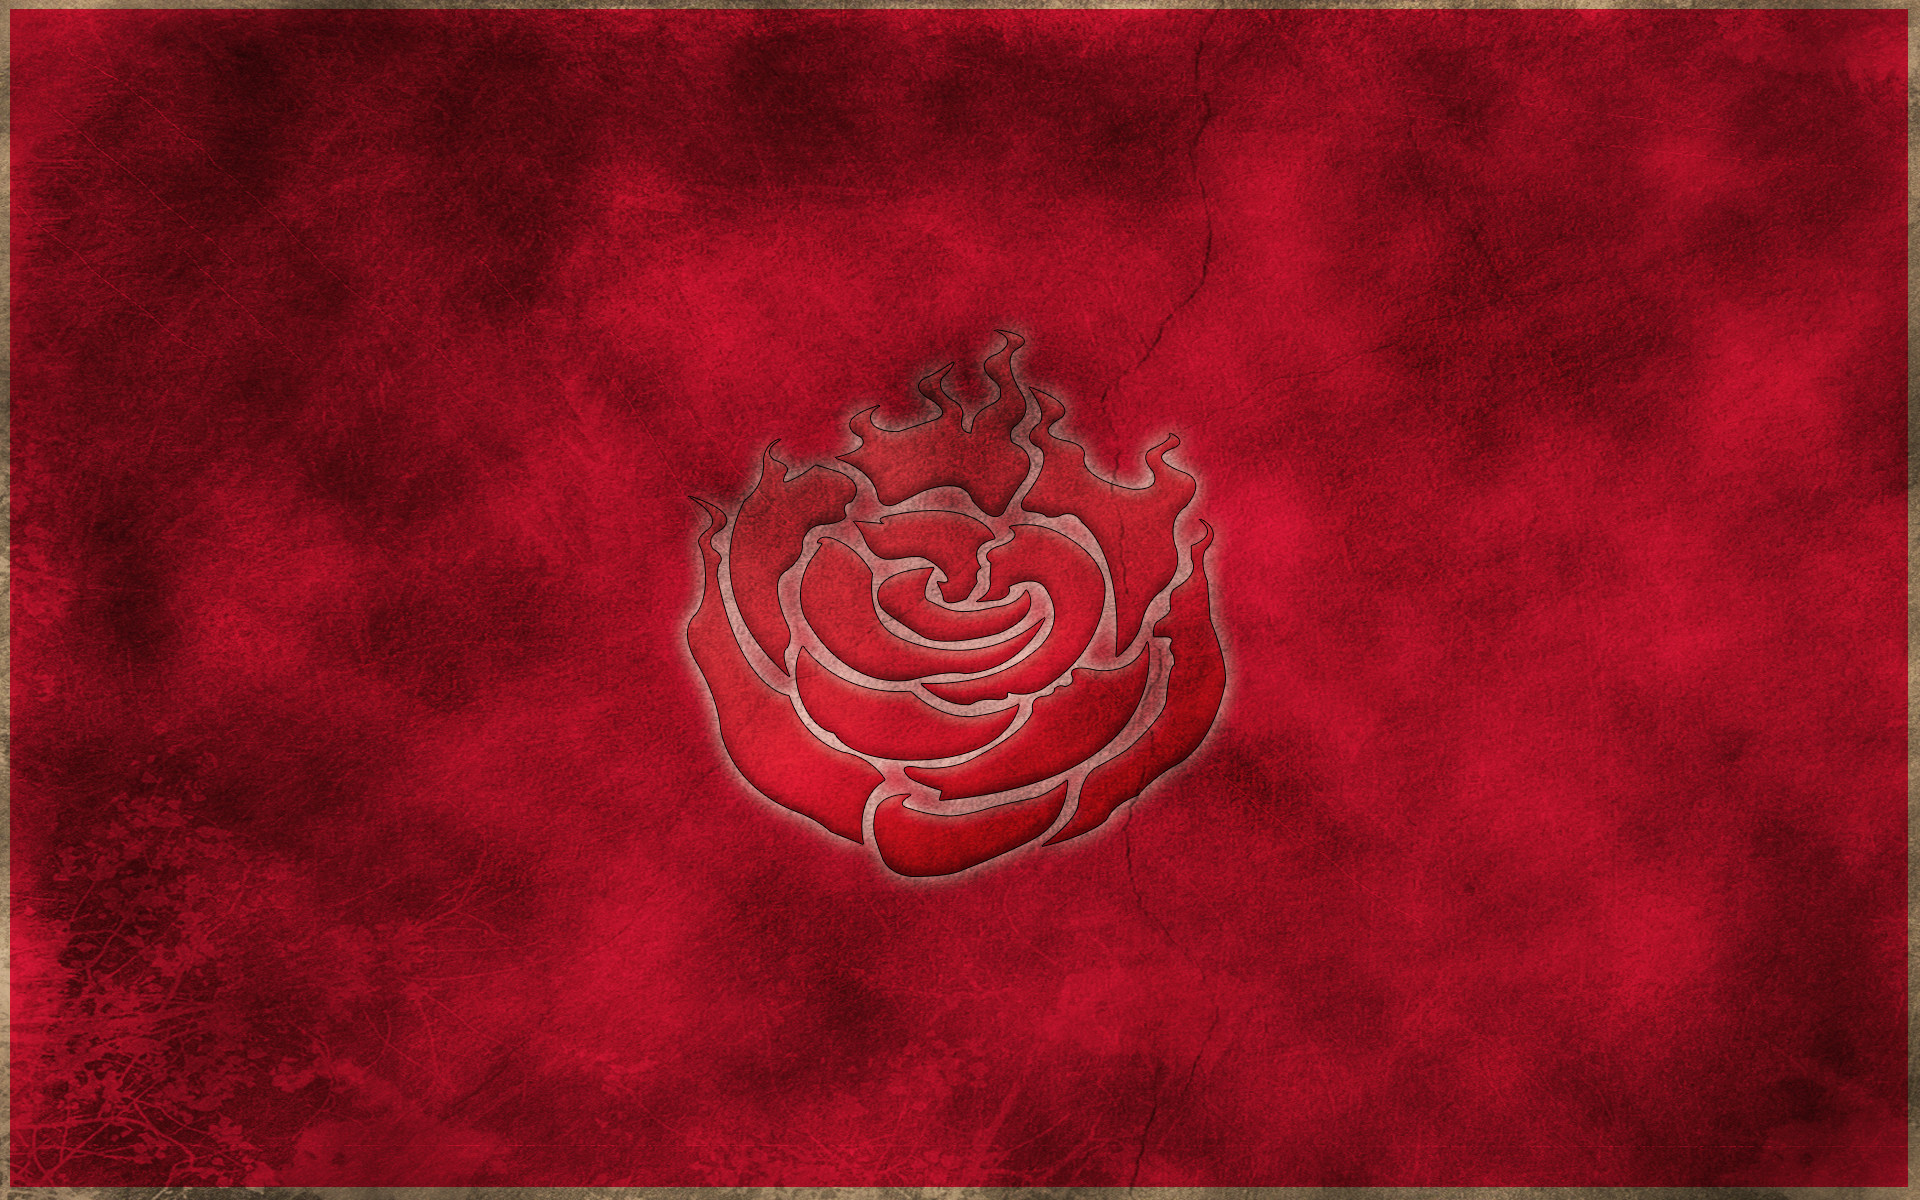 1920x1200 Image - Rwby ruby rose symbol wallpaper by crypticspider-d7fz6qp.jpg | RWBY  Wiki | FANDOM powered by Wikia